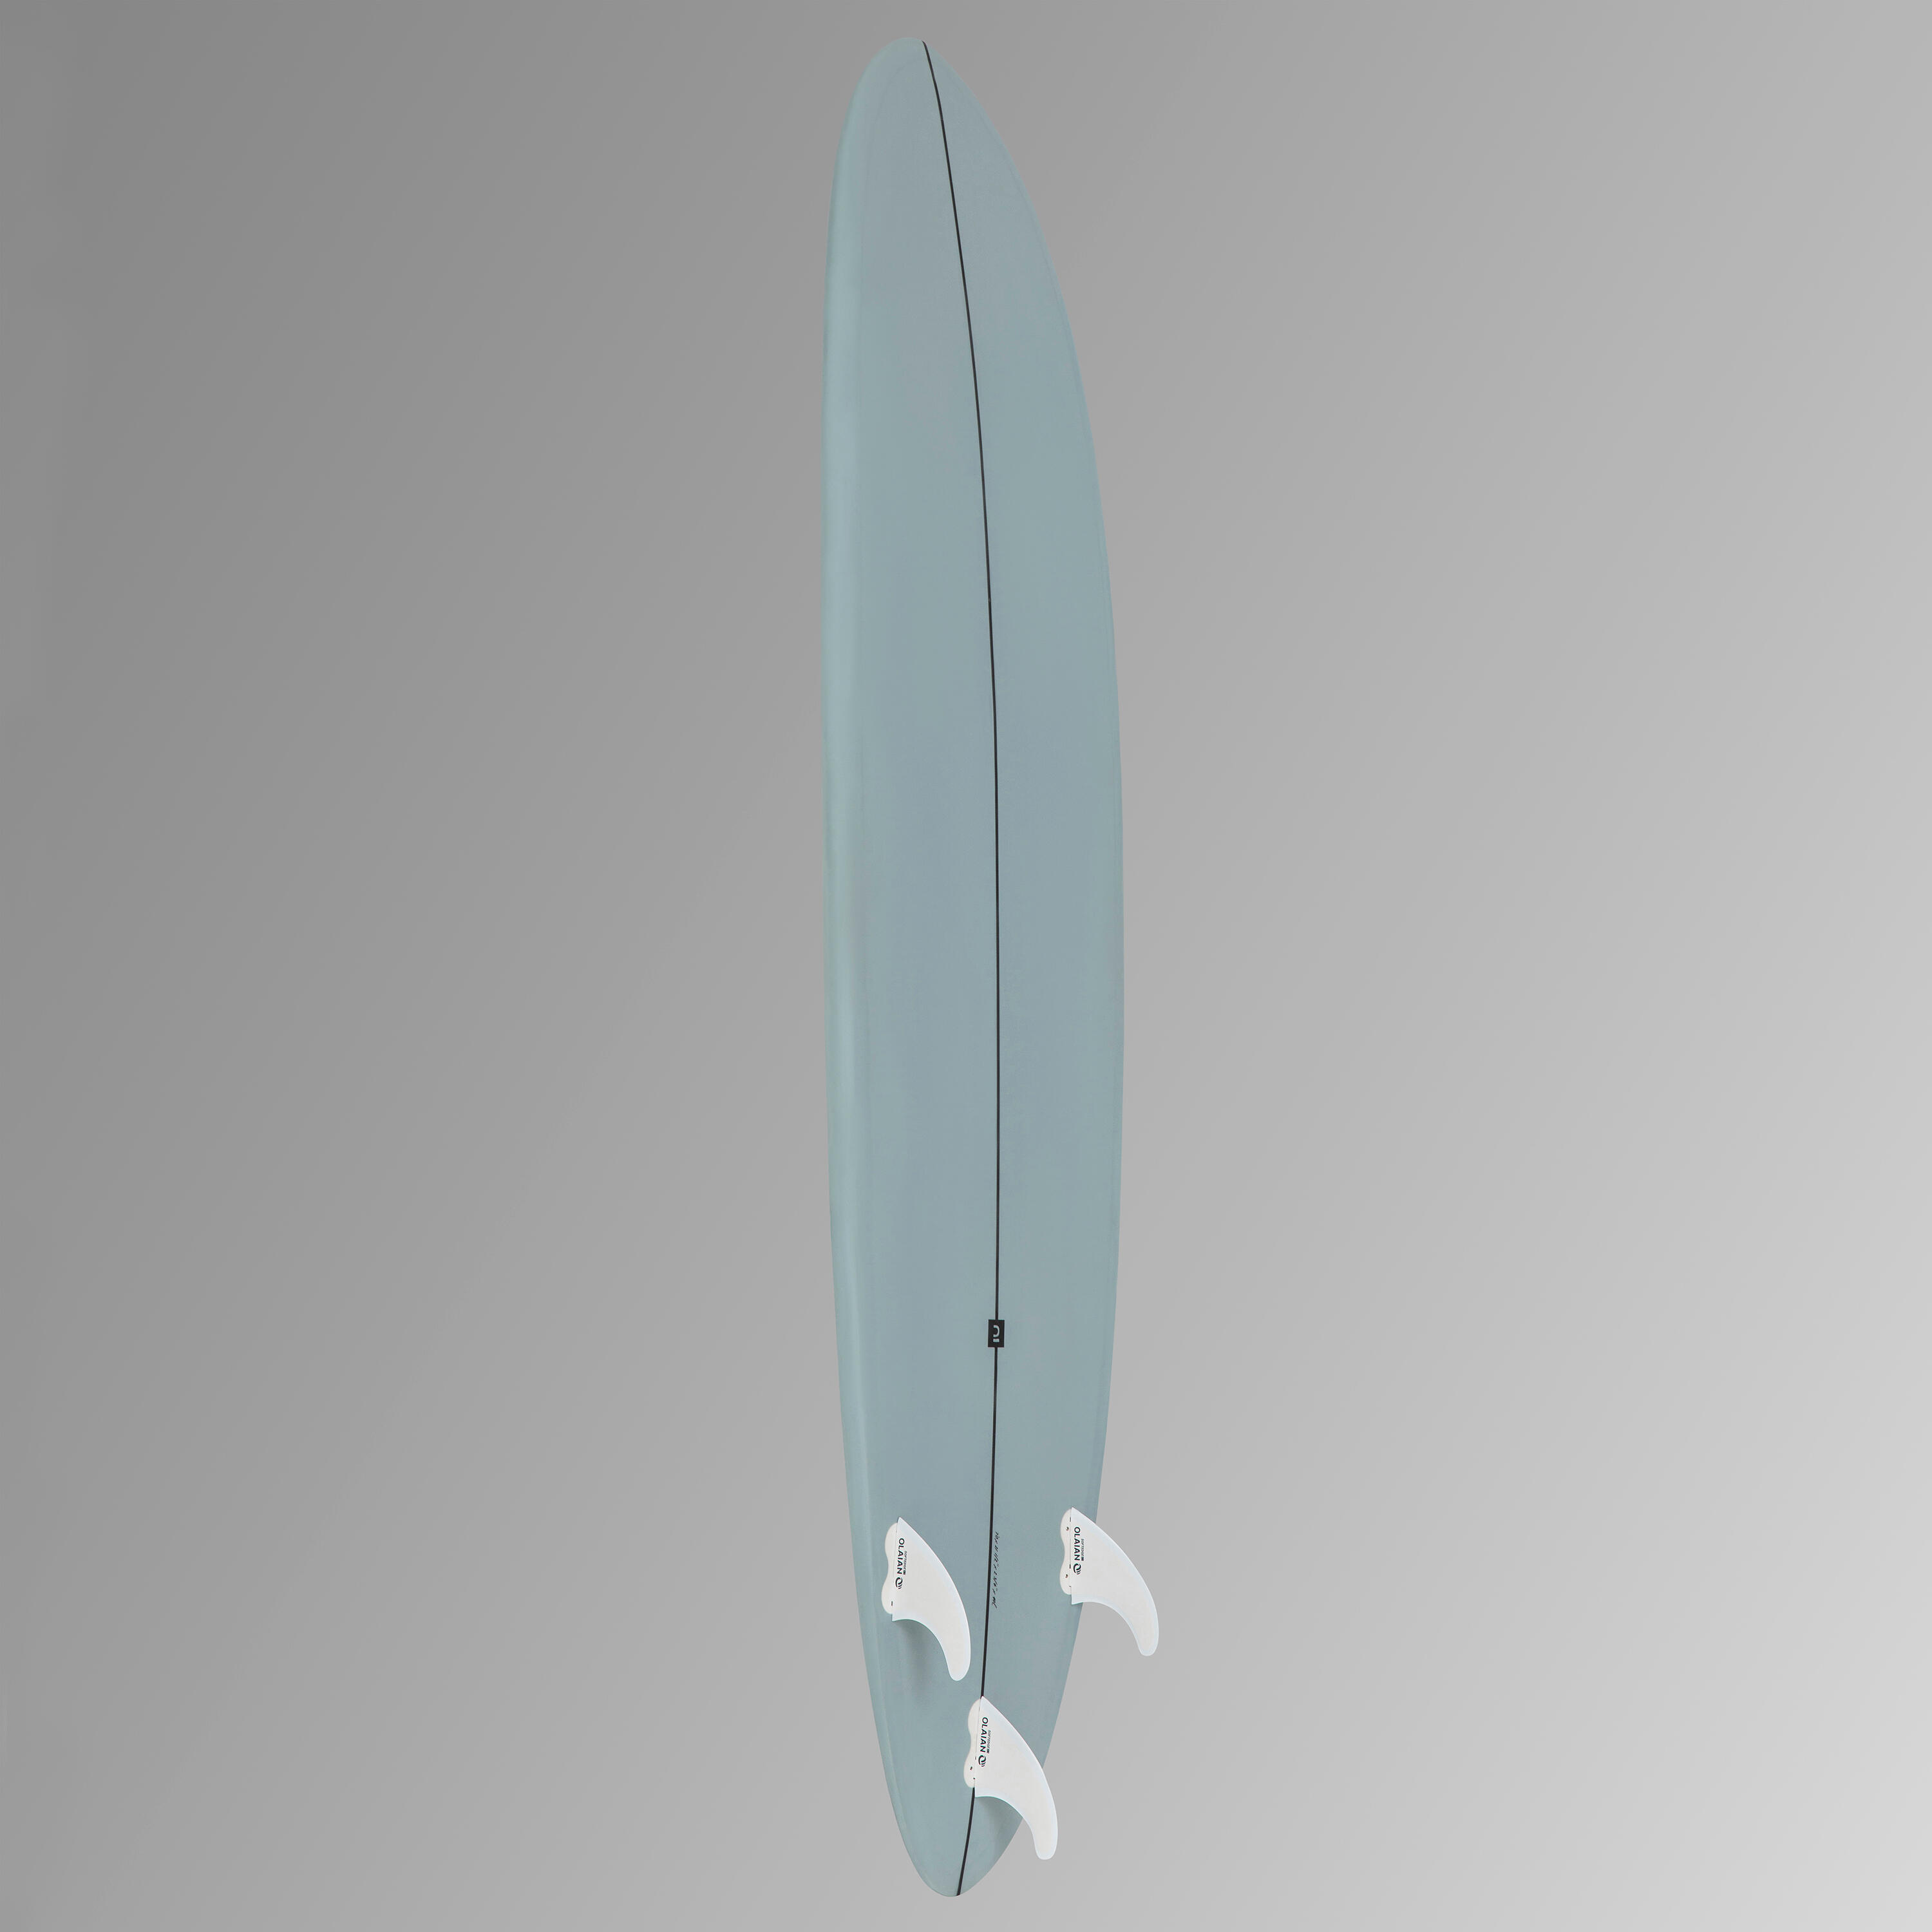 SURFBOARD 500 Hybrid 7' with three fins. 8/14